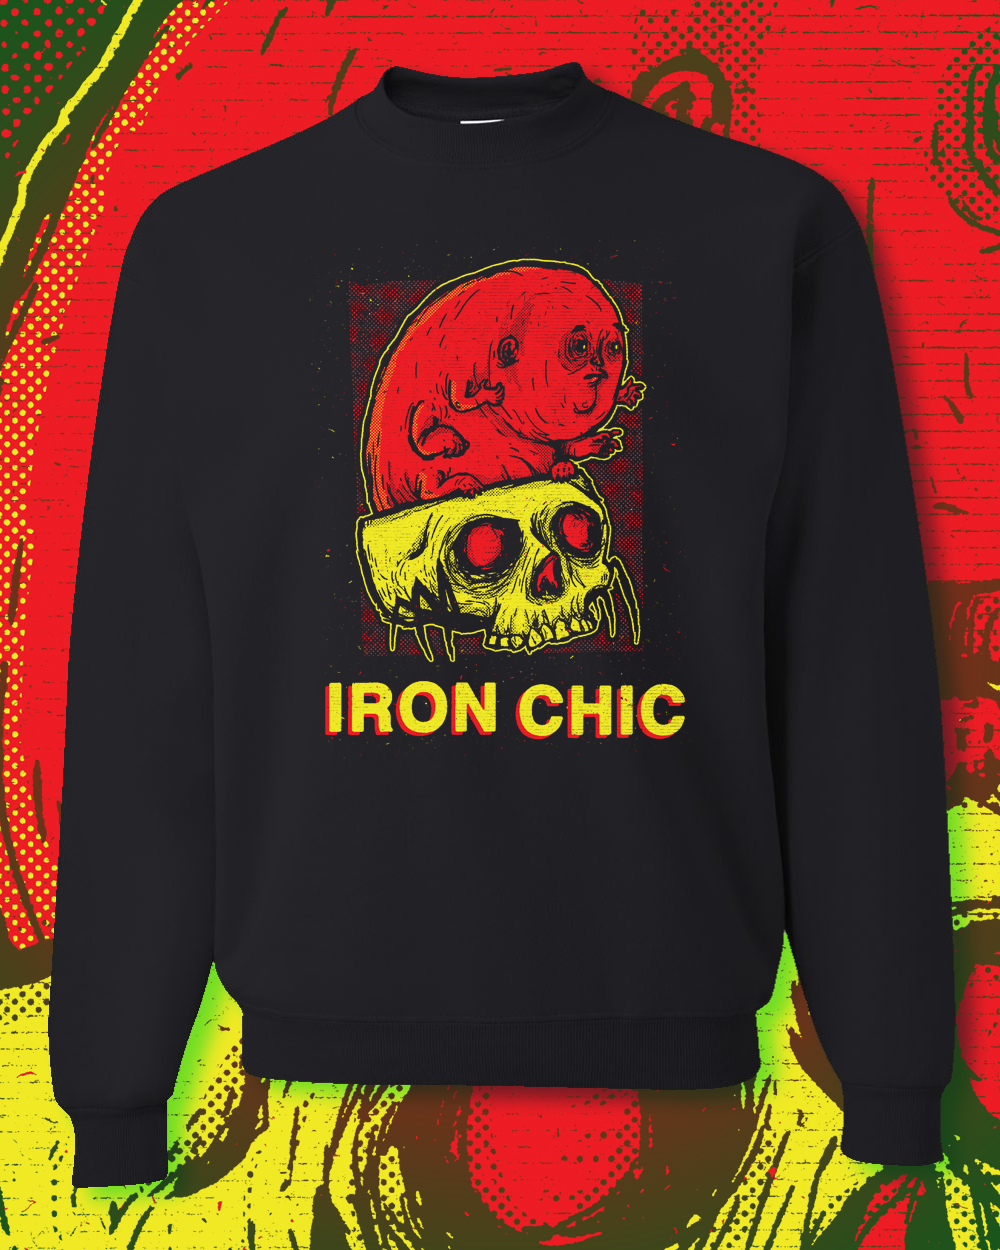 Iron Chic - Not Like This crewneck sweatshirt